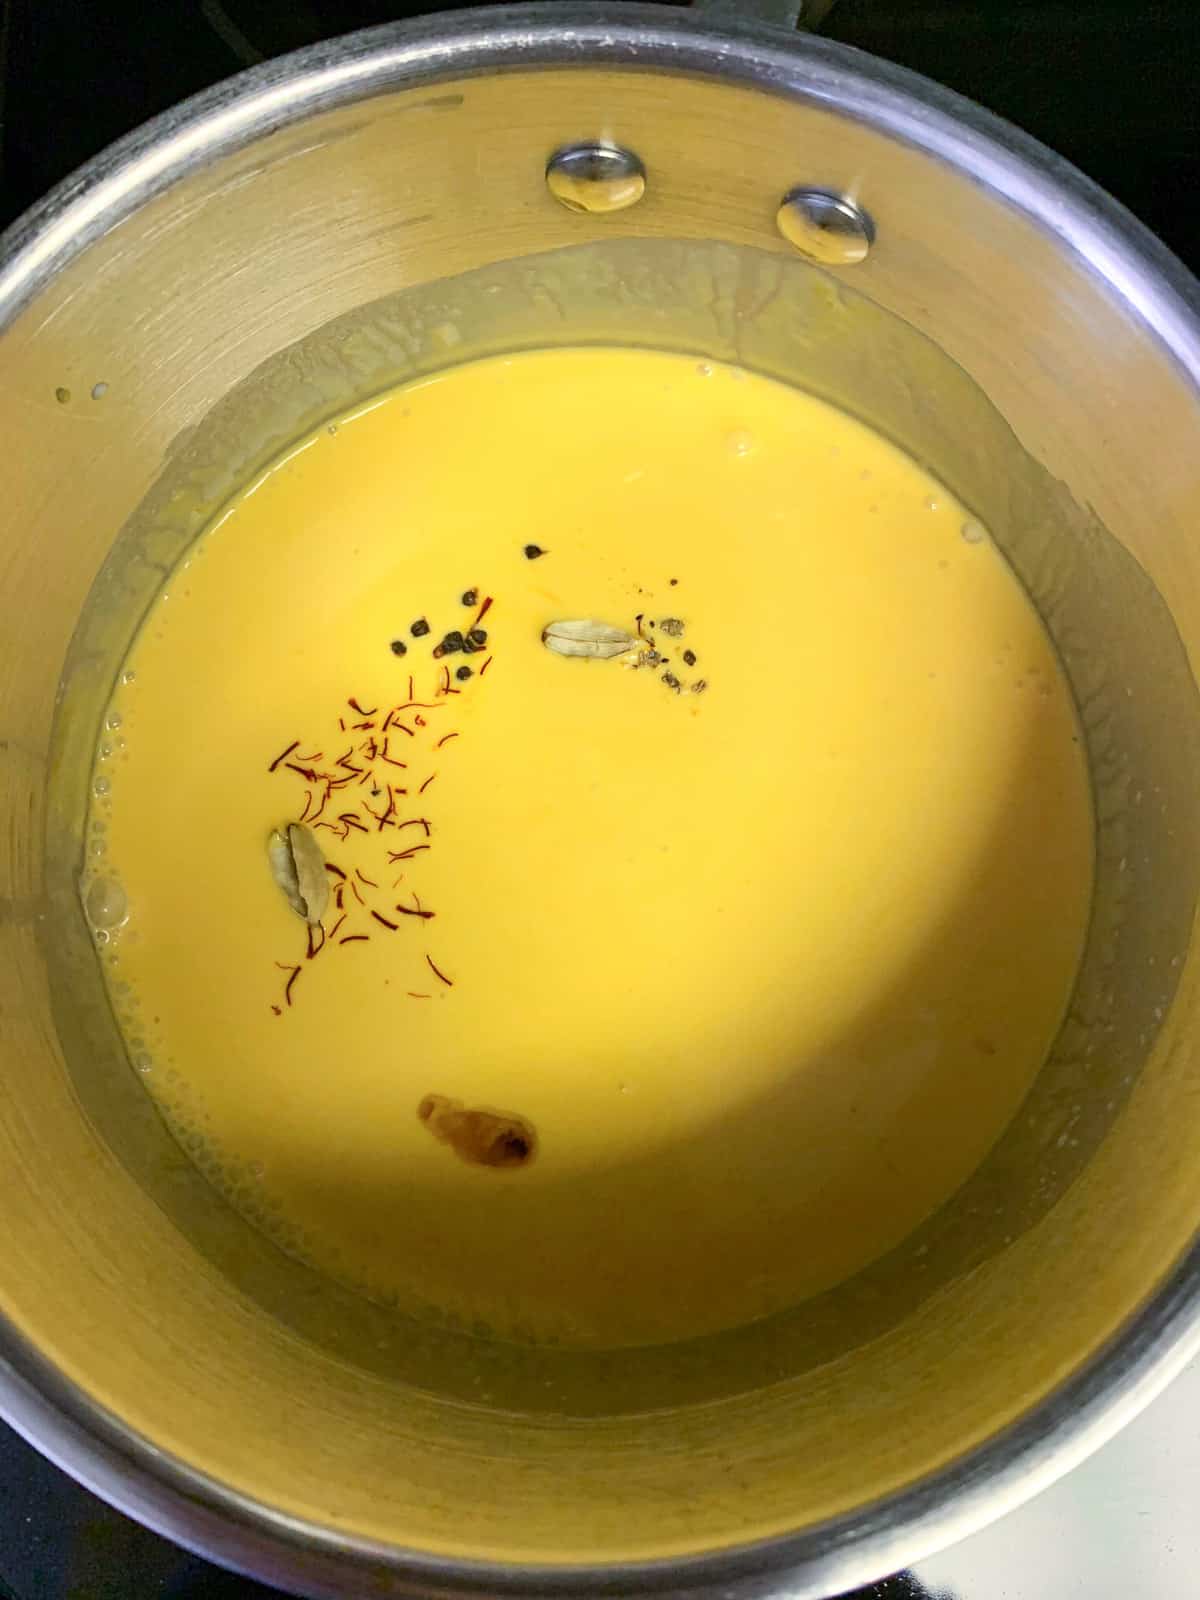 Adding mango puree and cream to the pot